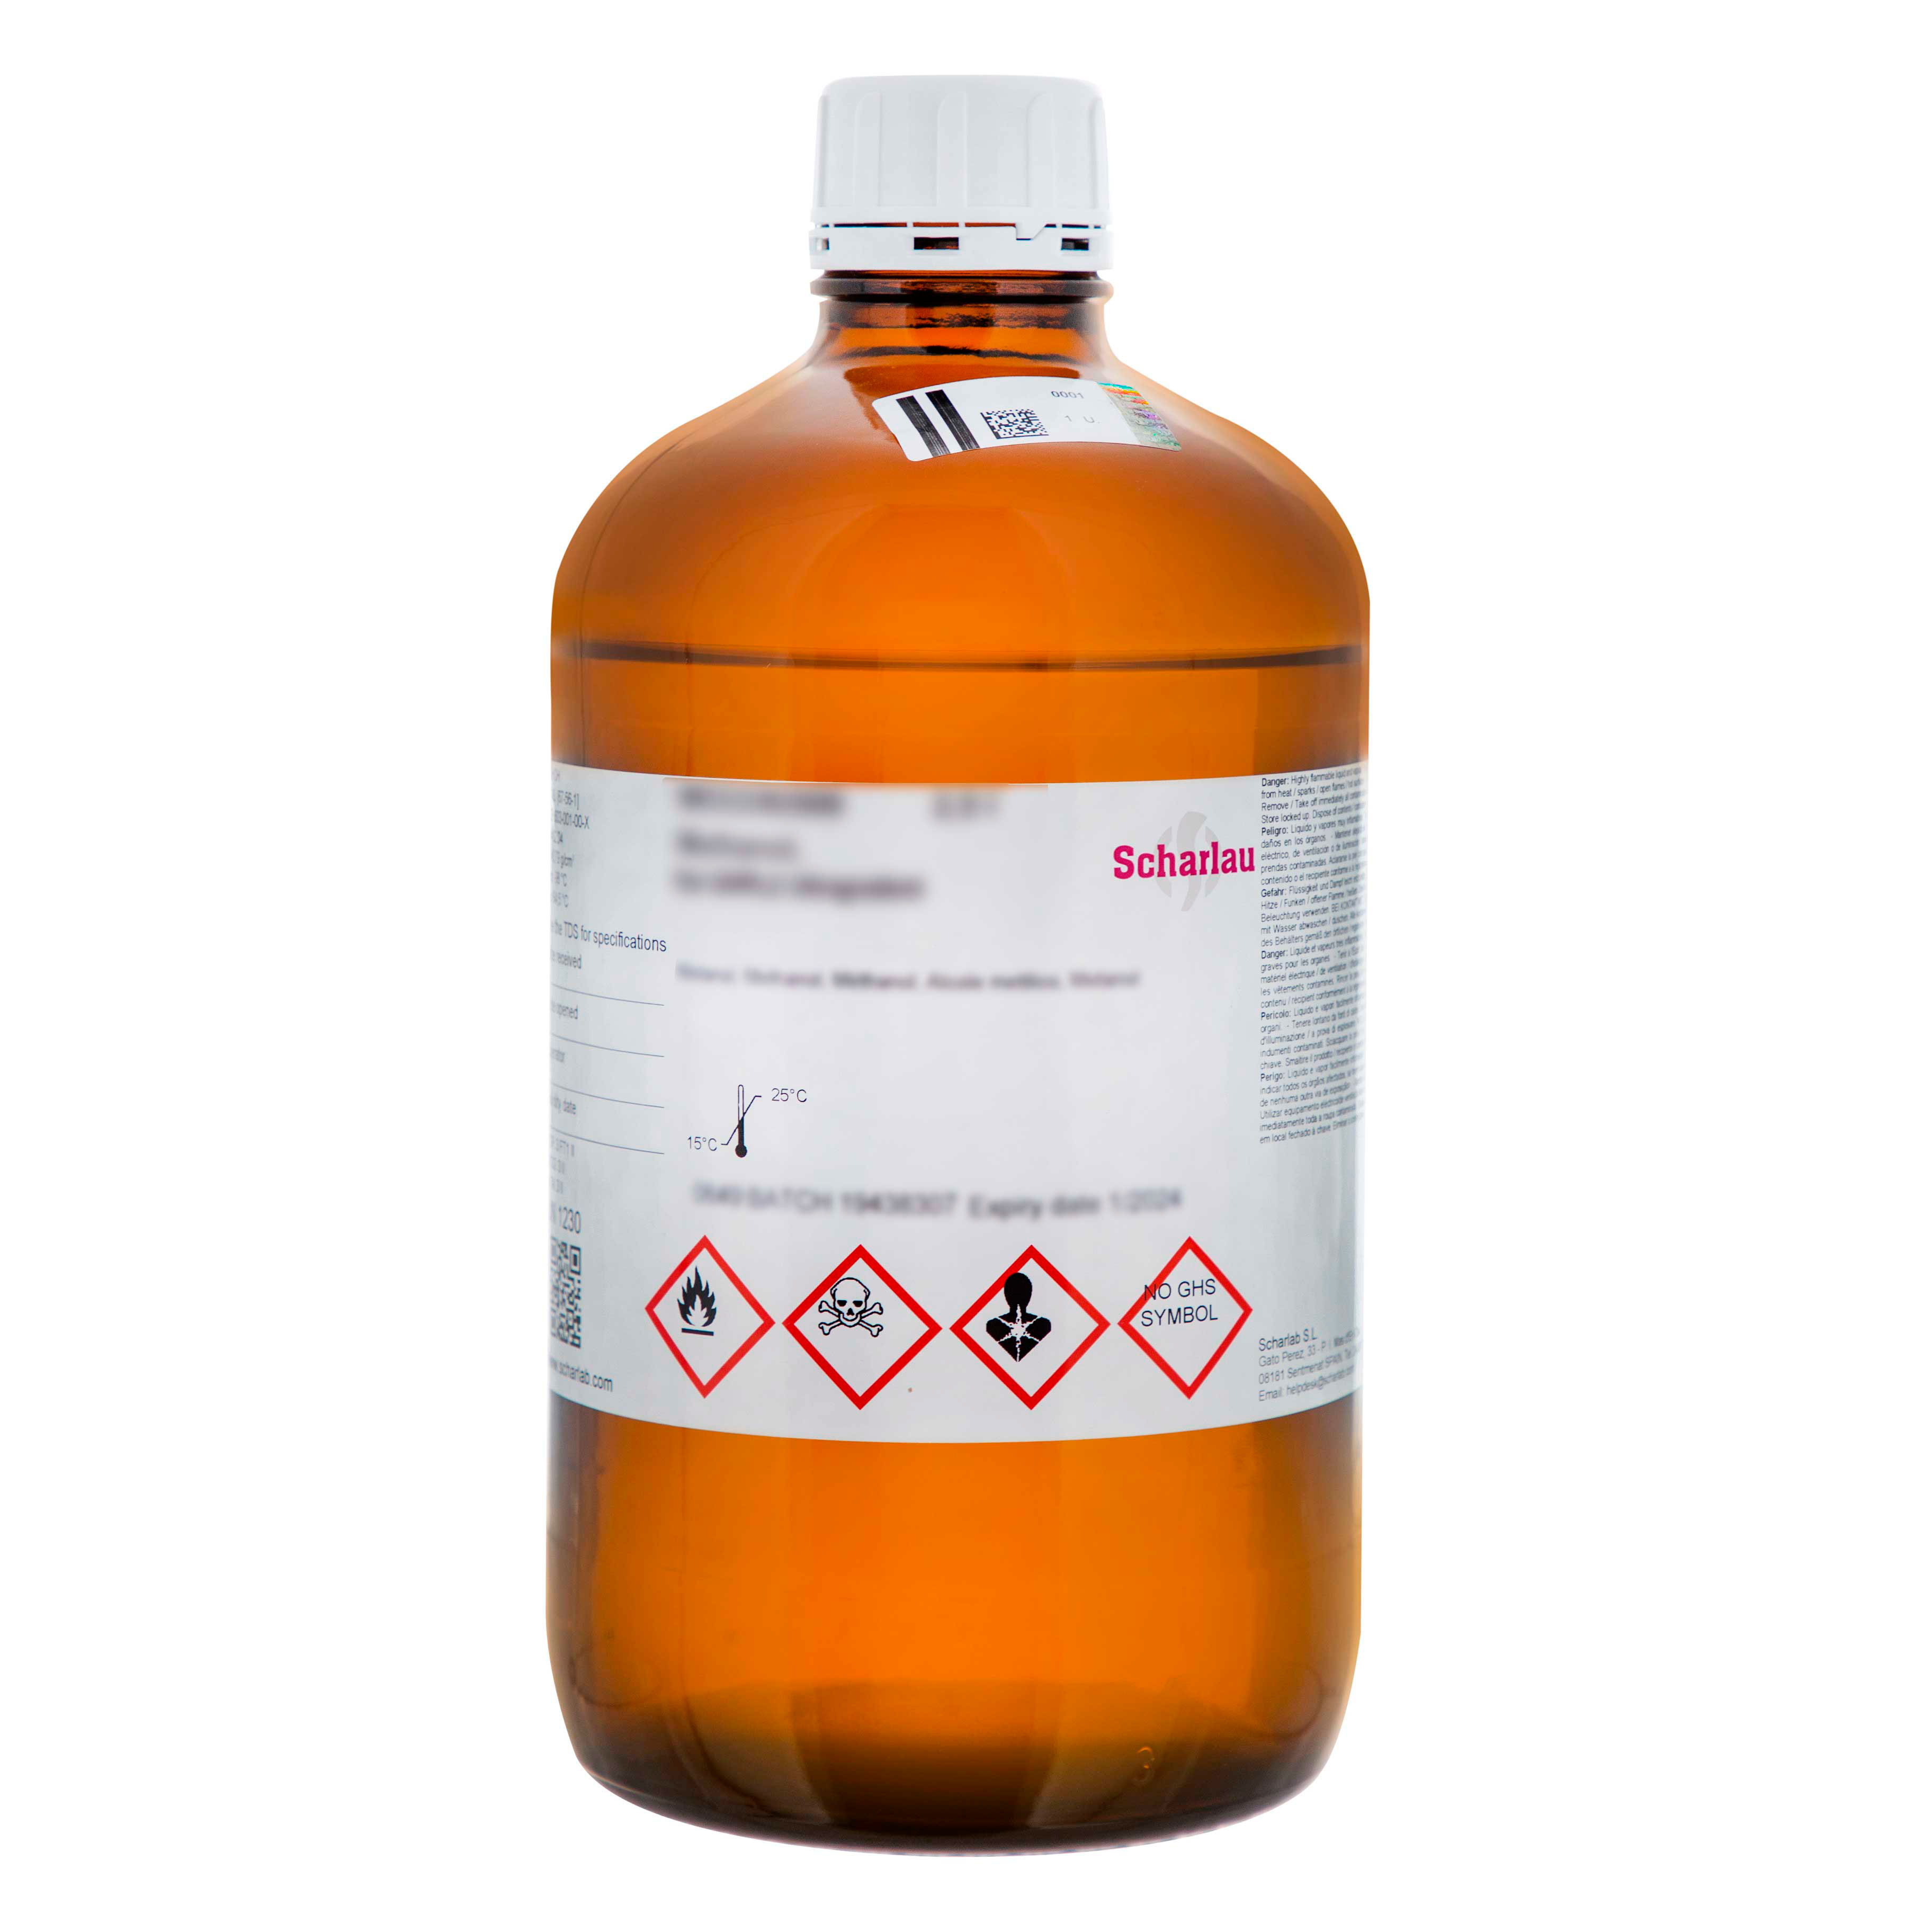 Isooctanol, para HPLC, 2-Etil-1-hexanol, Alcohol isooctílico